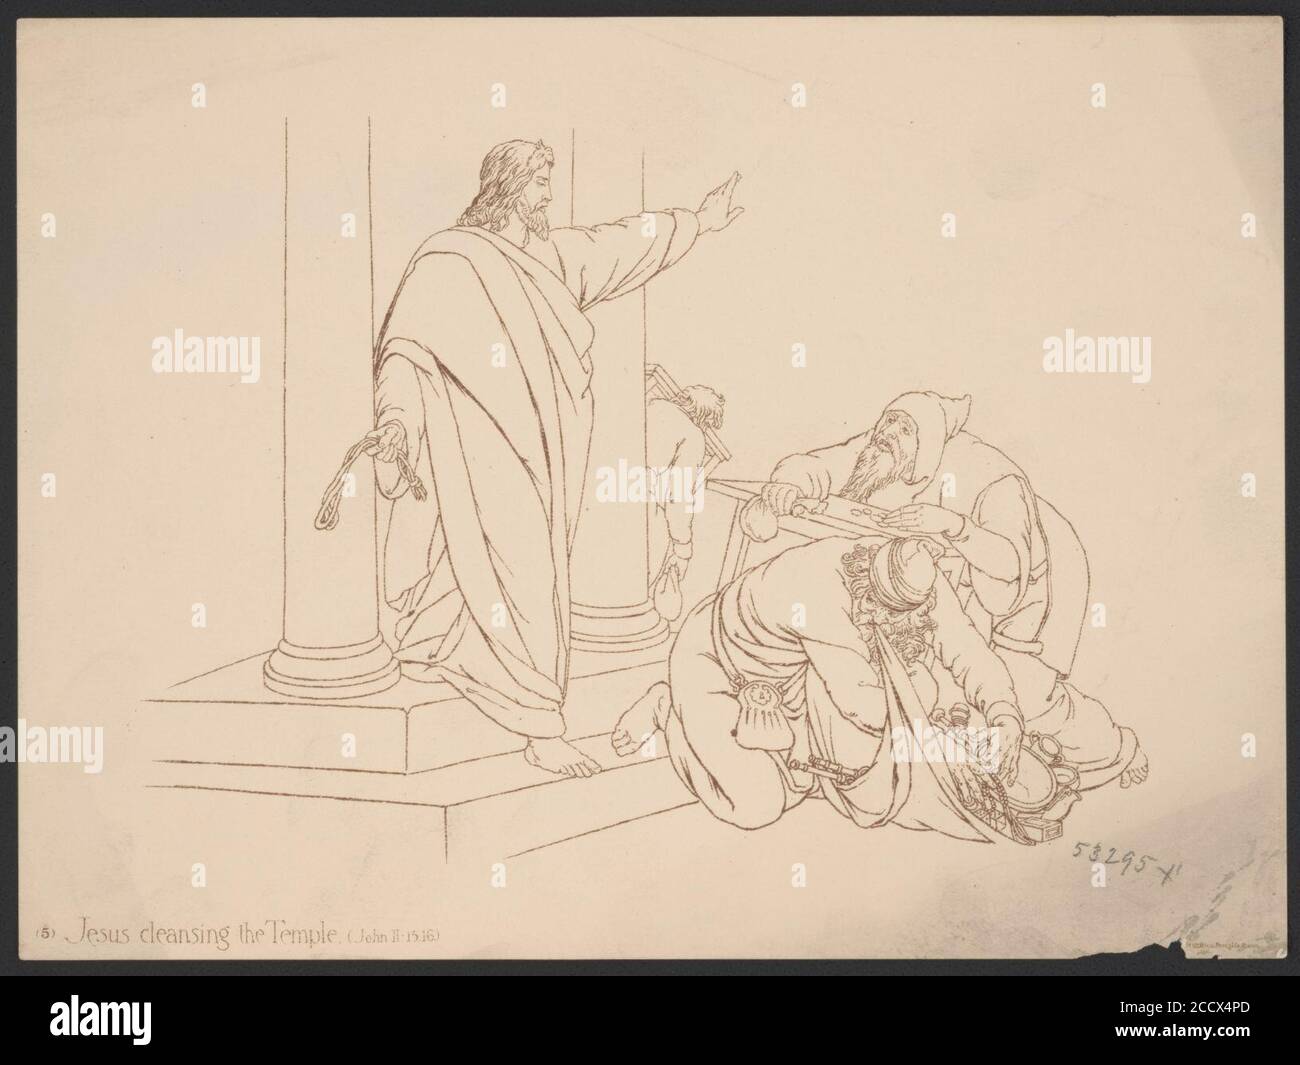 Jesus cleansing the Temple (John II-15,16) Stock Photo